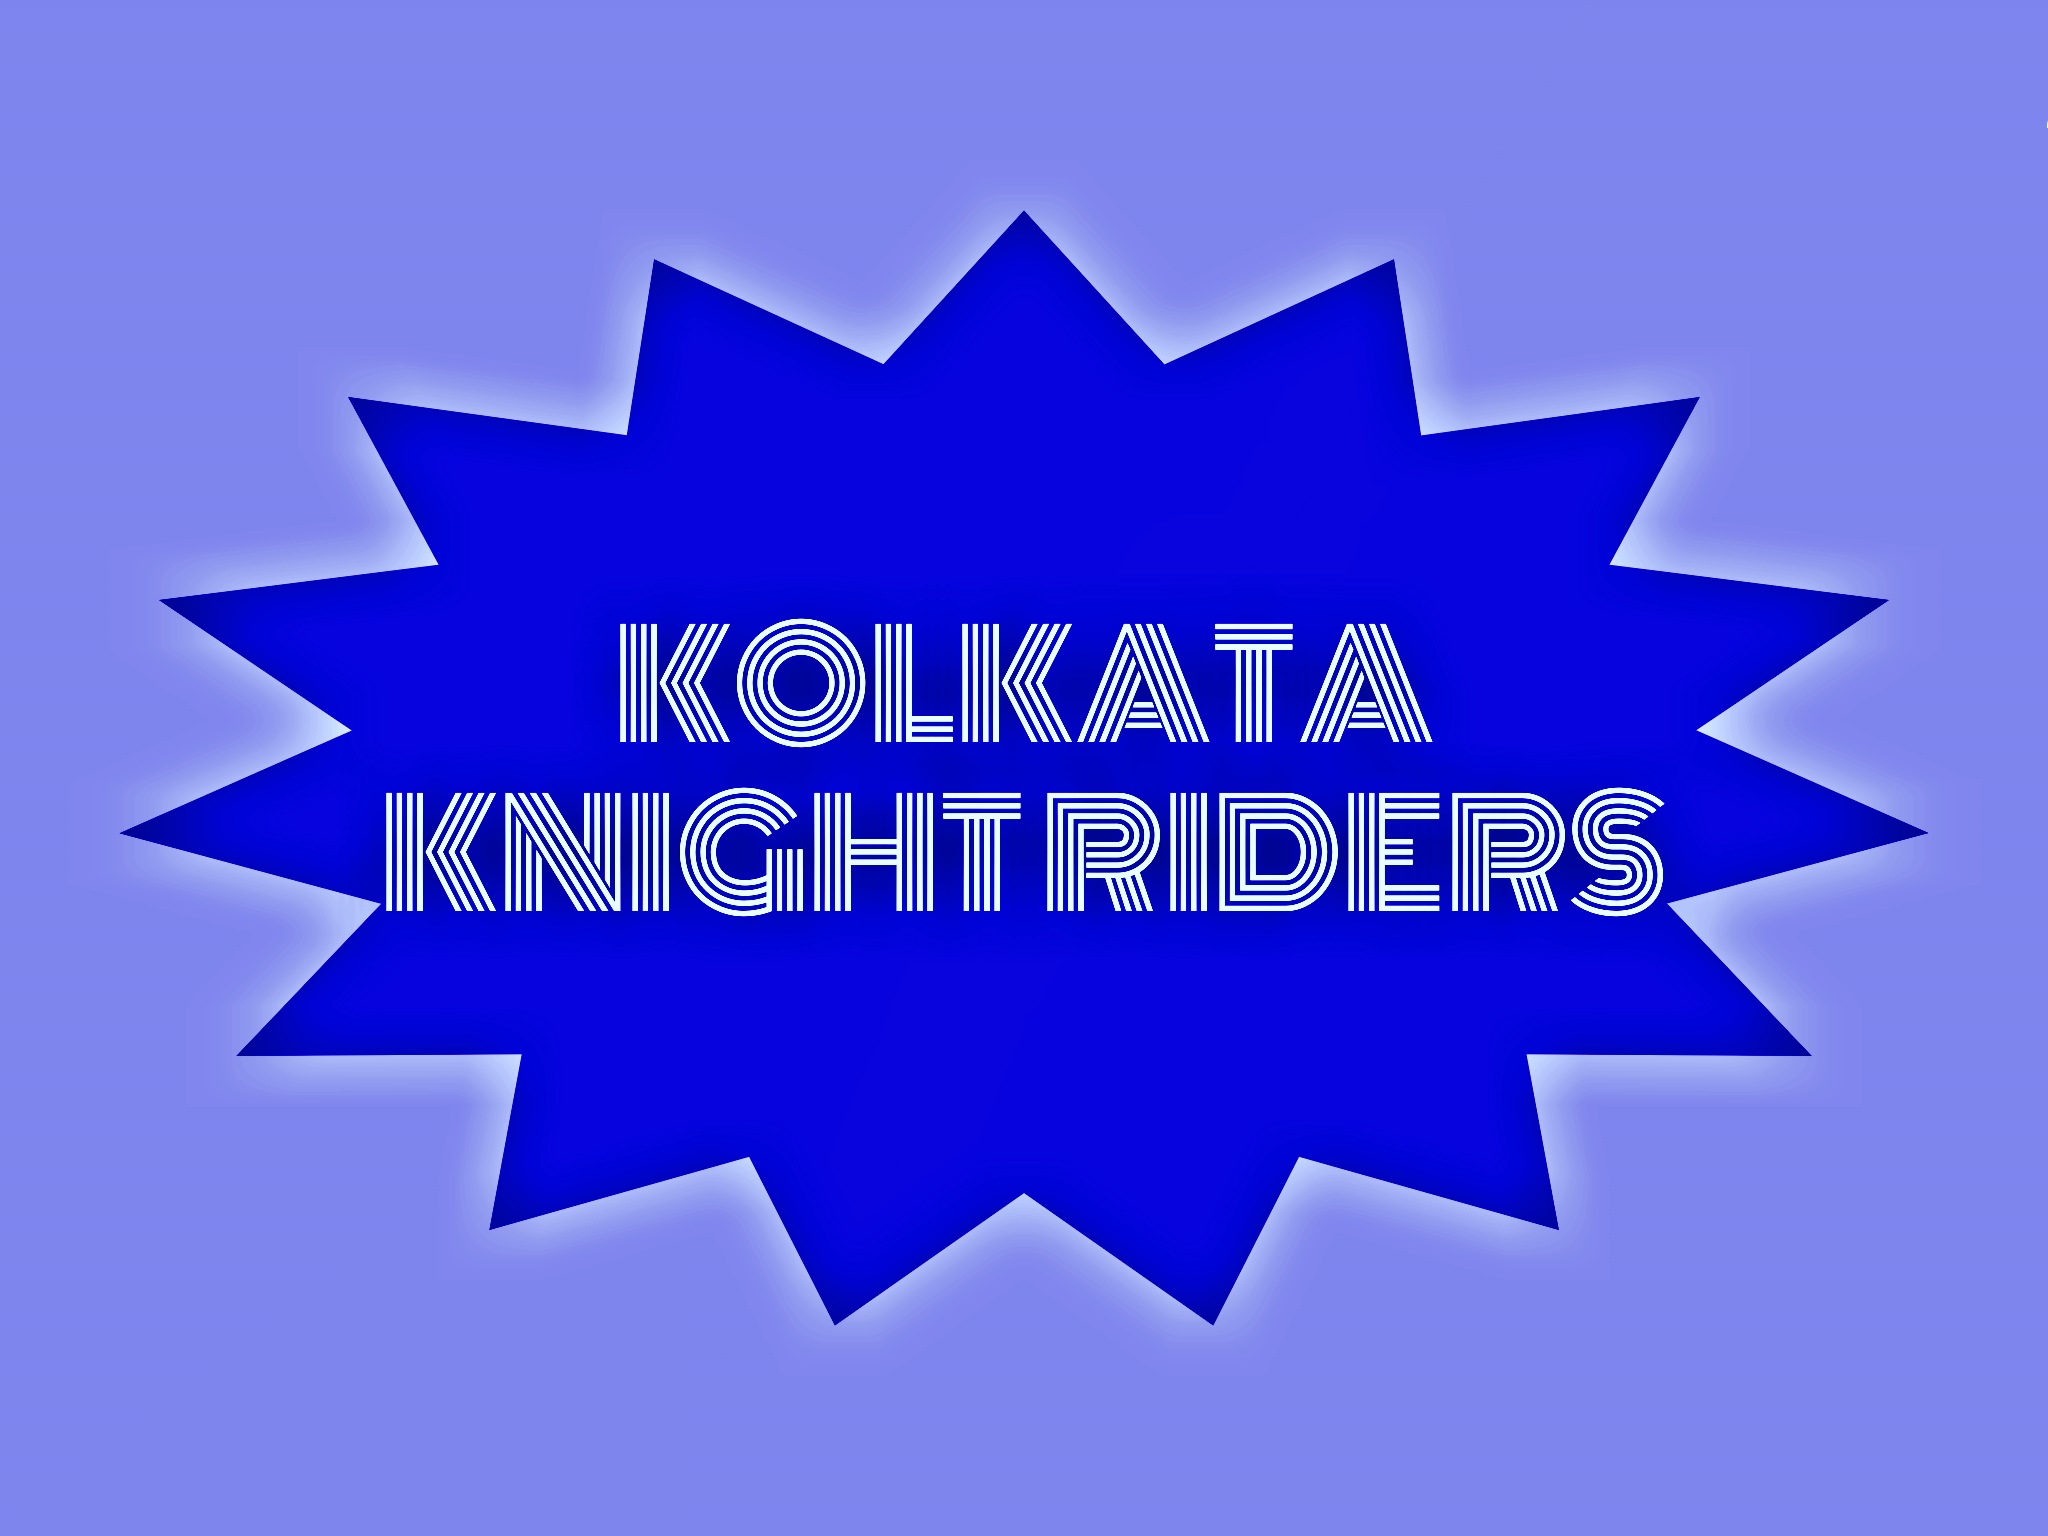 Kolkata Knight riders IPL team illustration